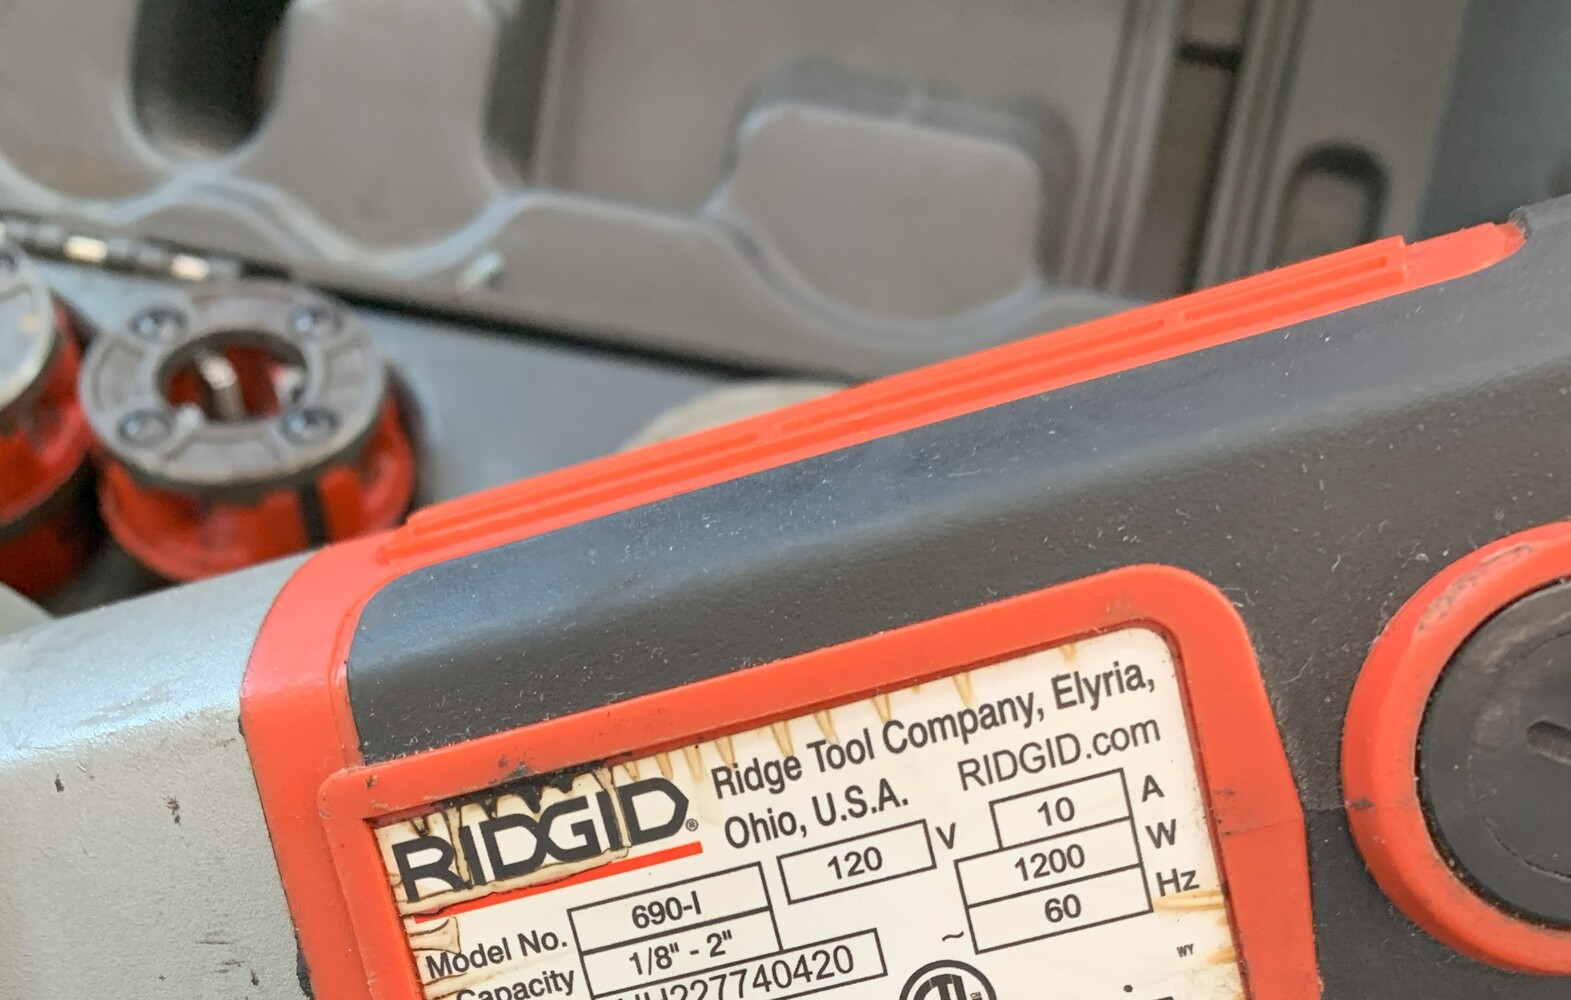  Ridgid 690-I Pipe Threader with 1/8